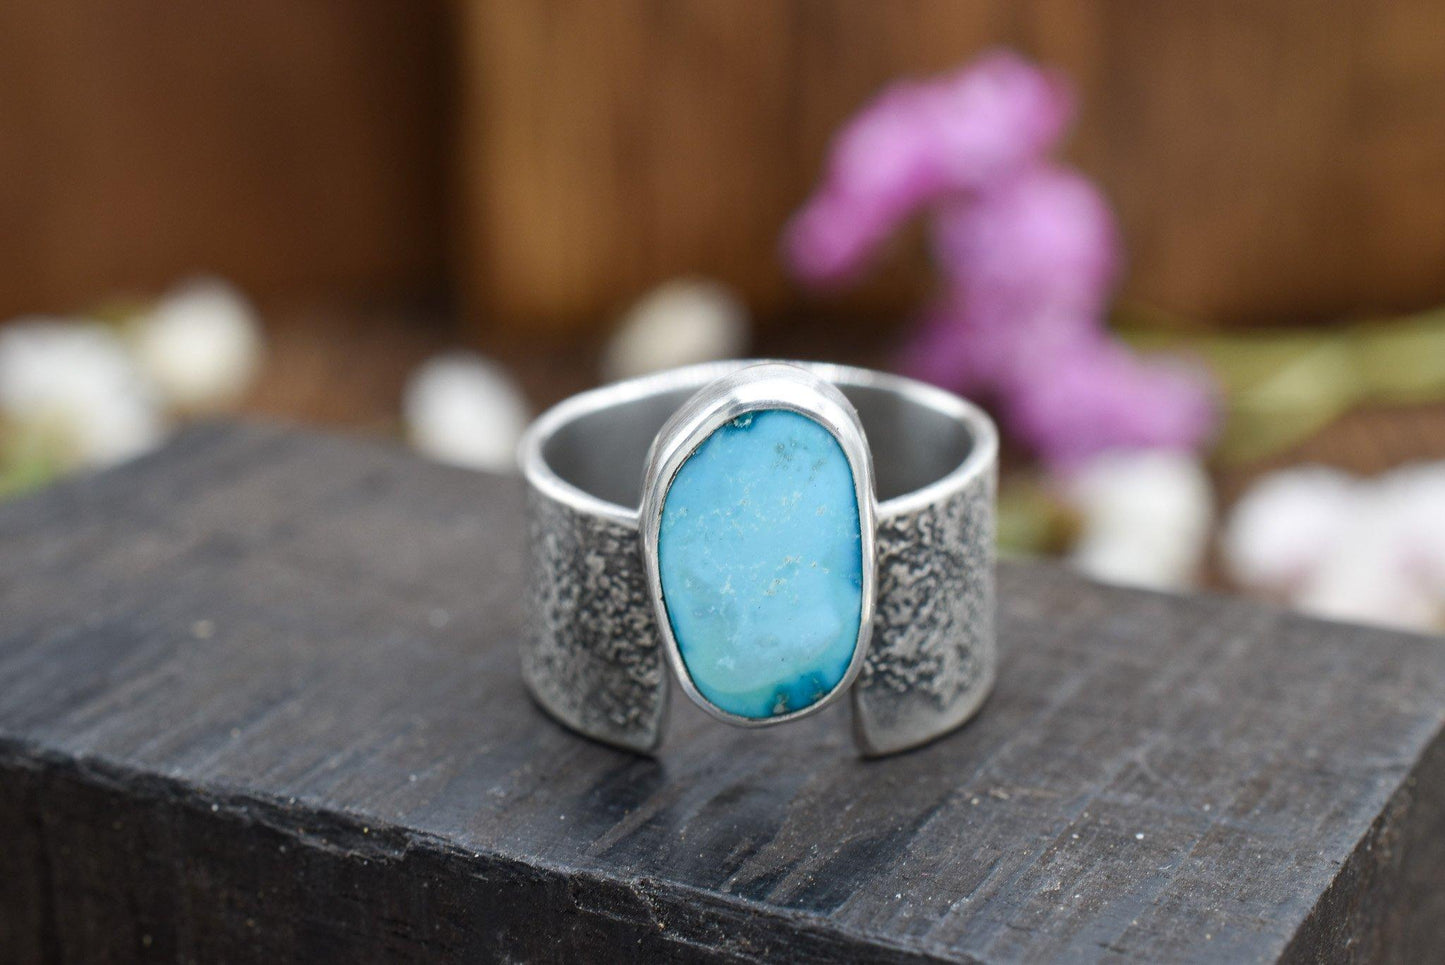 Turquoise "Canyon" Ring - Size 8